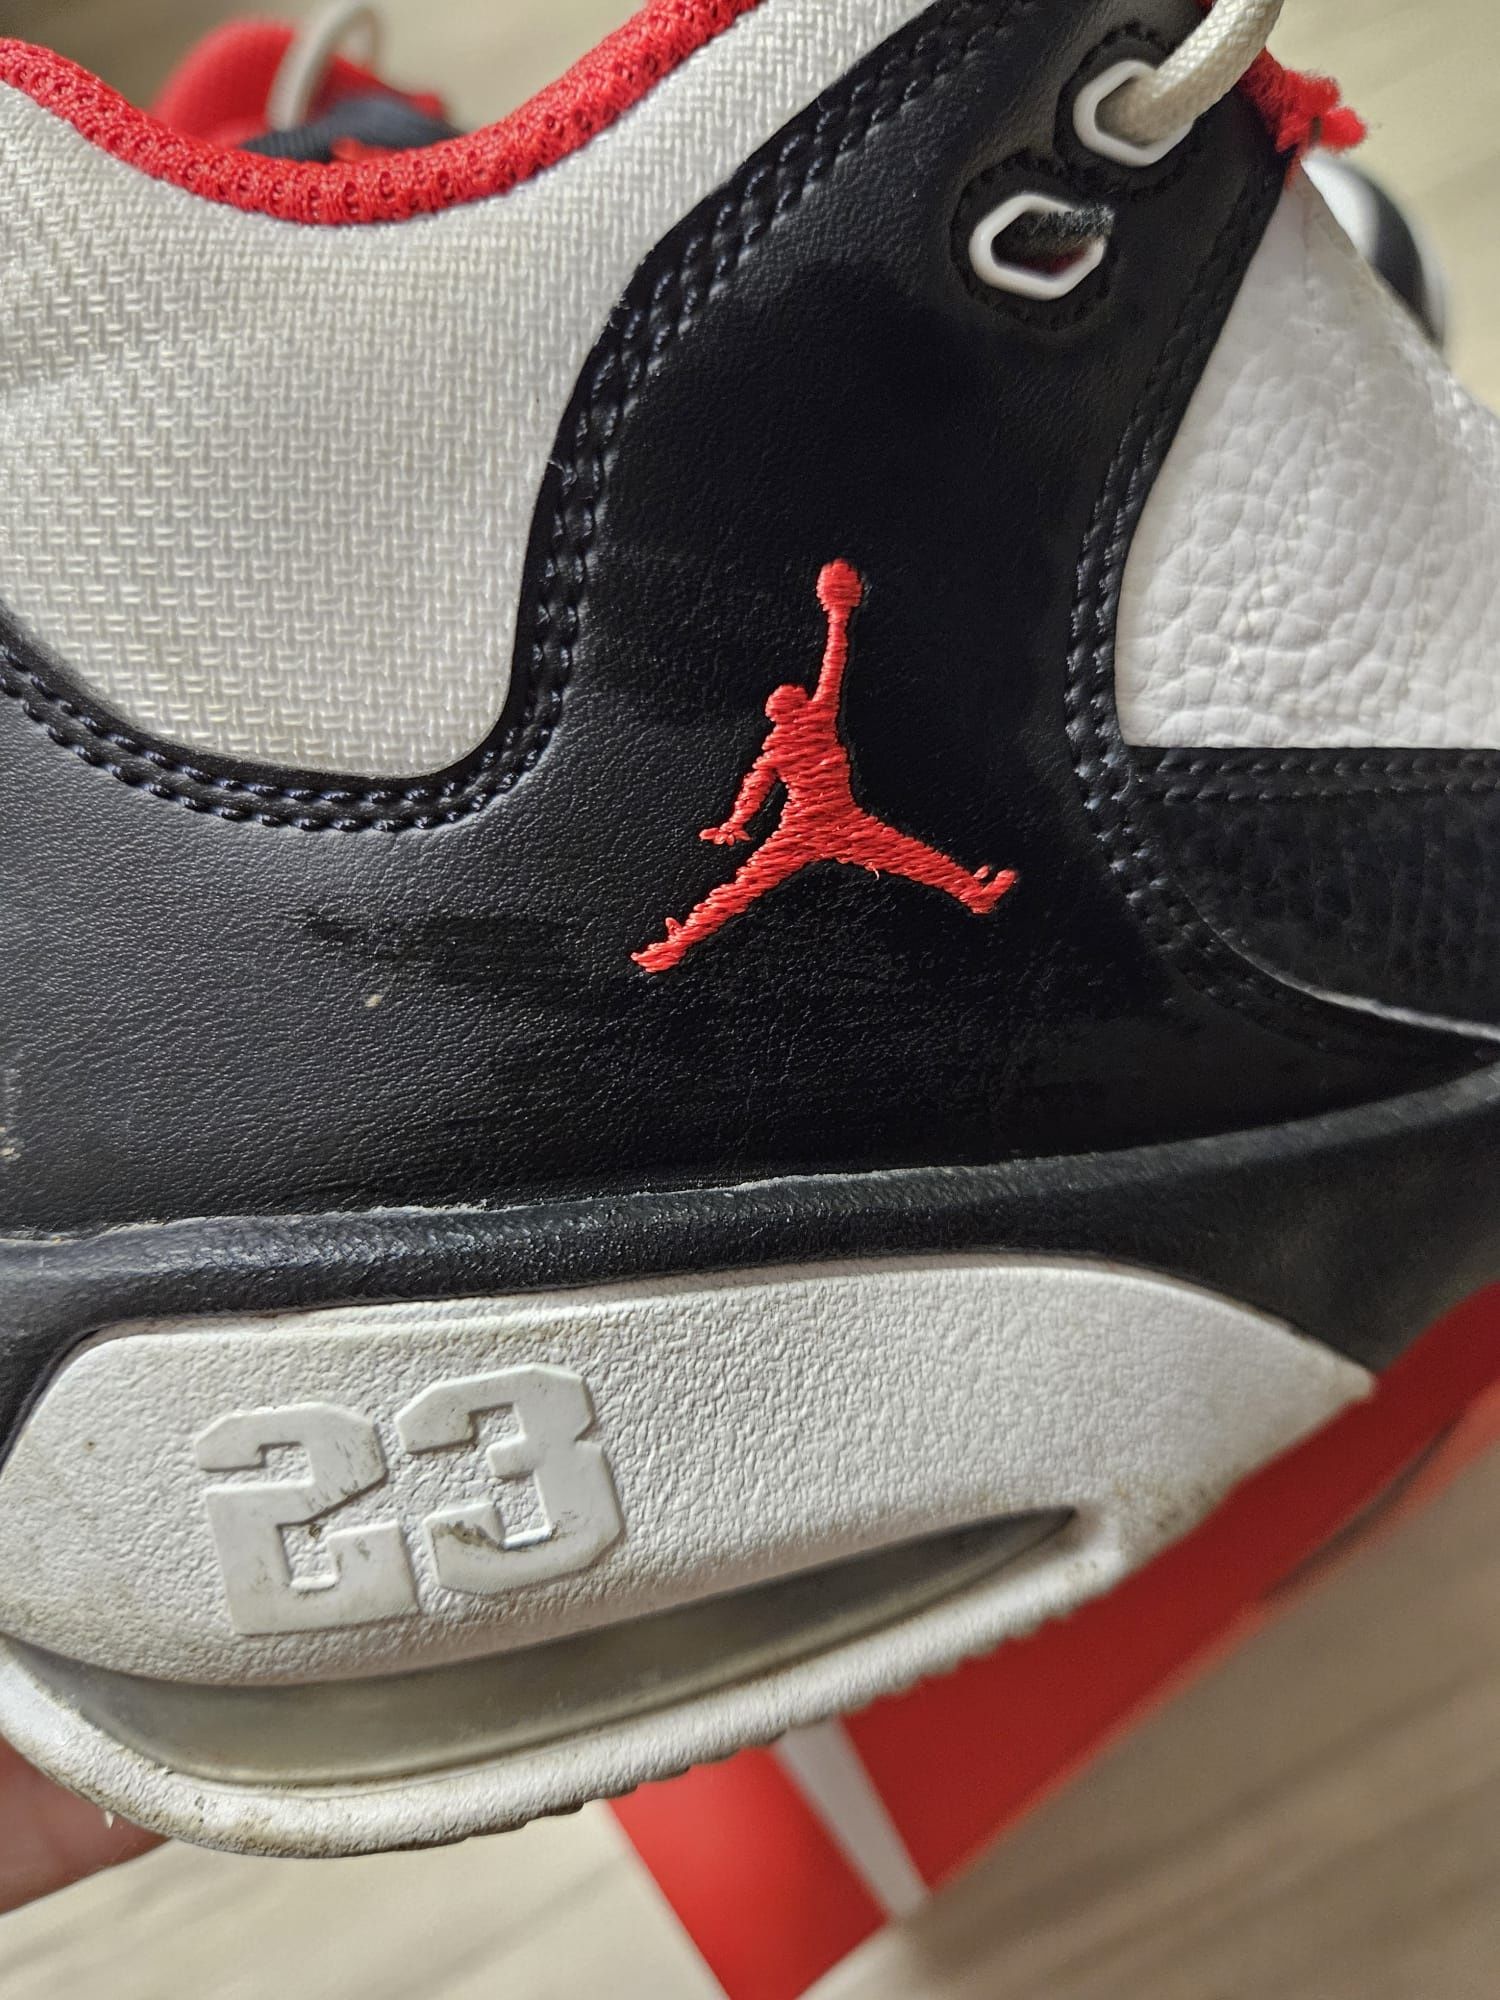 Adidasi Nike Jordan 23 pt copii măsura 37.5